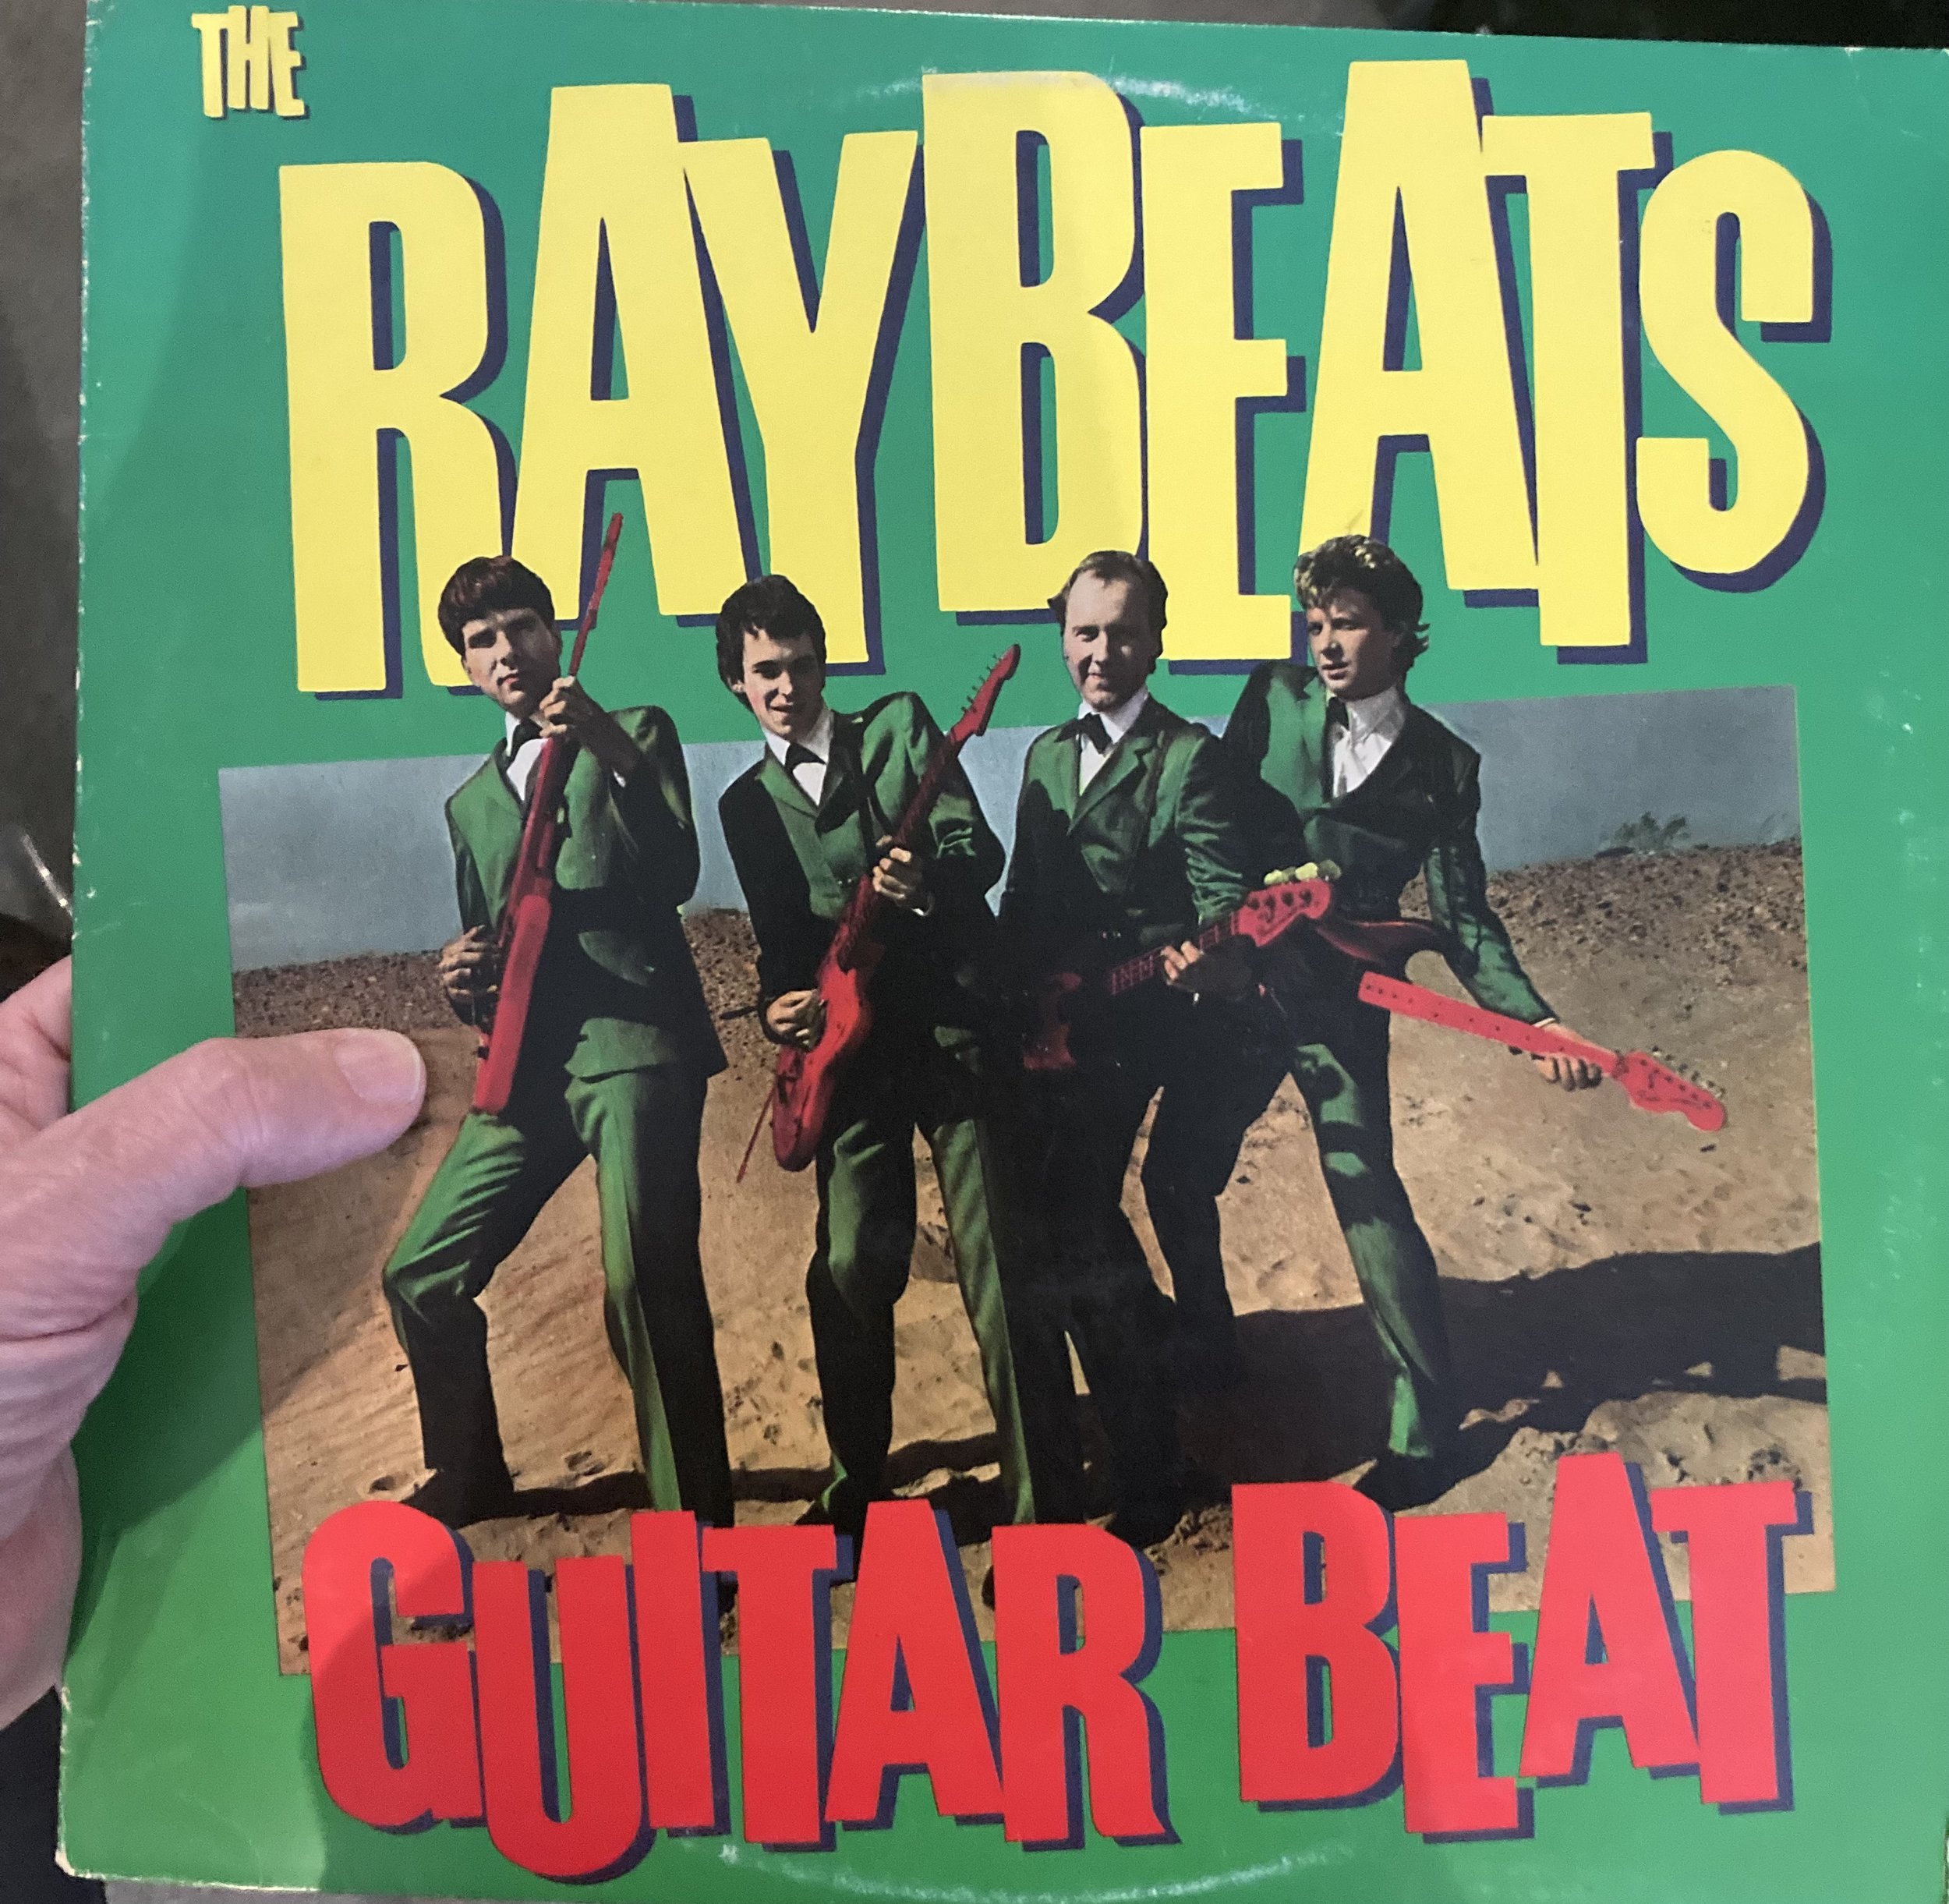 Raybeats_Guitar Beat_cover US version.jpeg